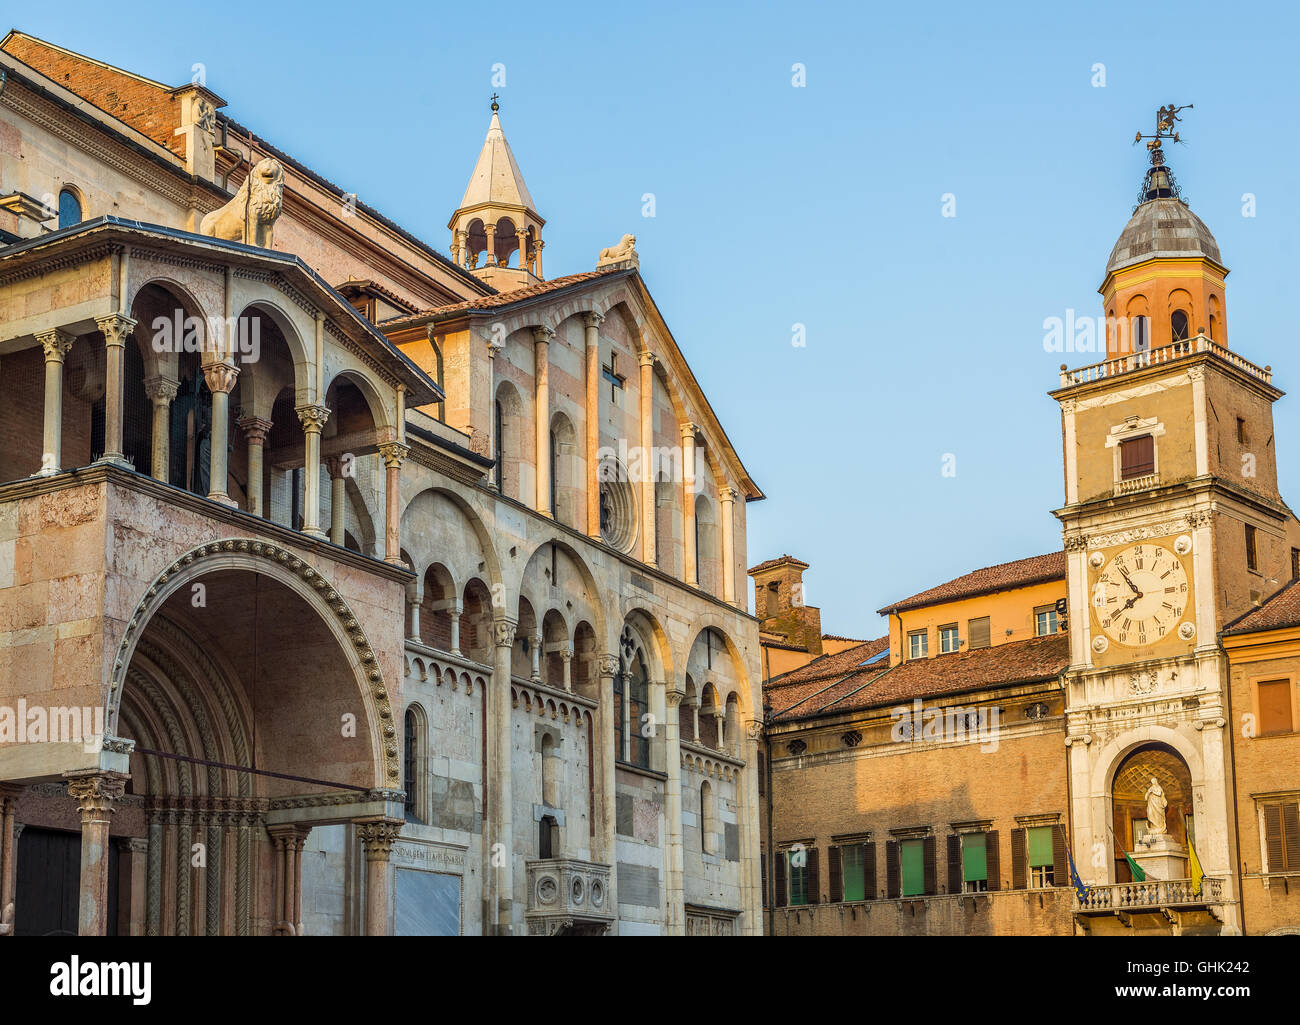 Metropolitan Cathedral of Santa Maria Assunta San Geminiano and the Palazzo Comunale, city hall, Piazza Grande of Modena. Italy. Stock Photo